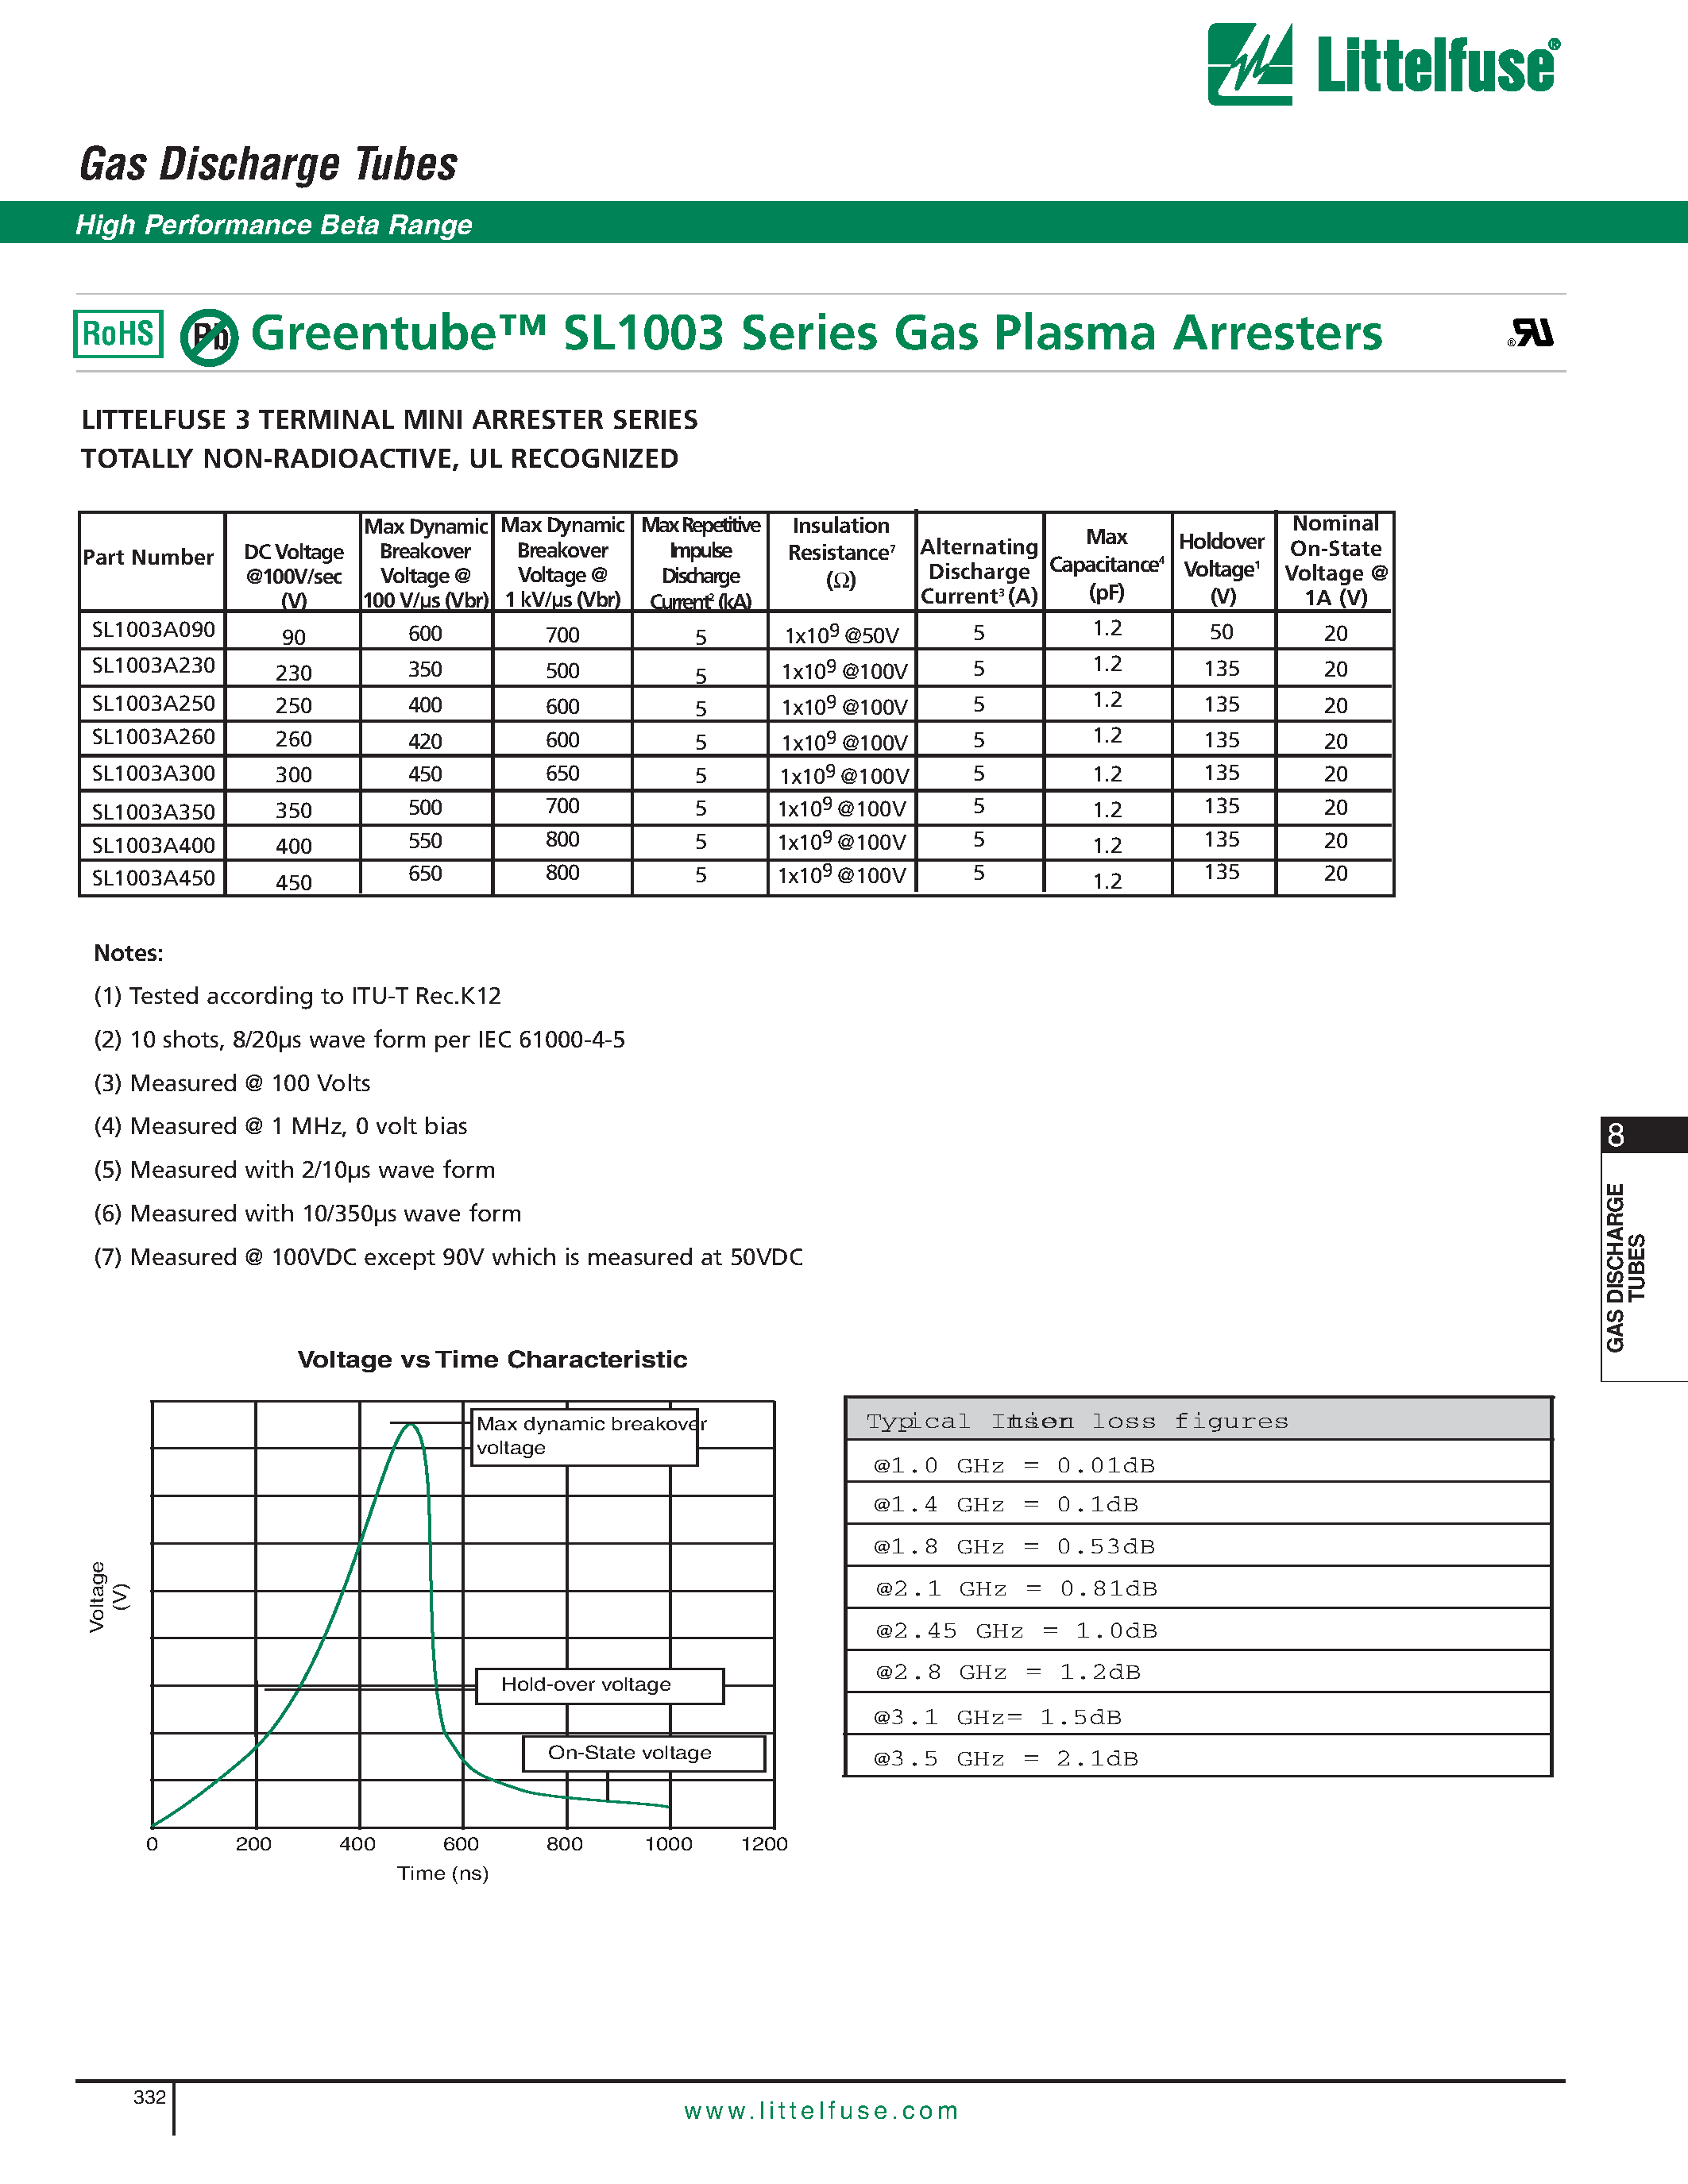 Datasheet SL1003A250 - Greentube SL1003 Series Gas Plasma Arresters page 2